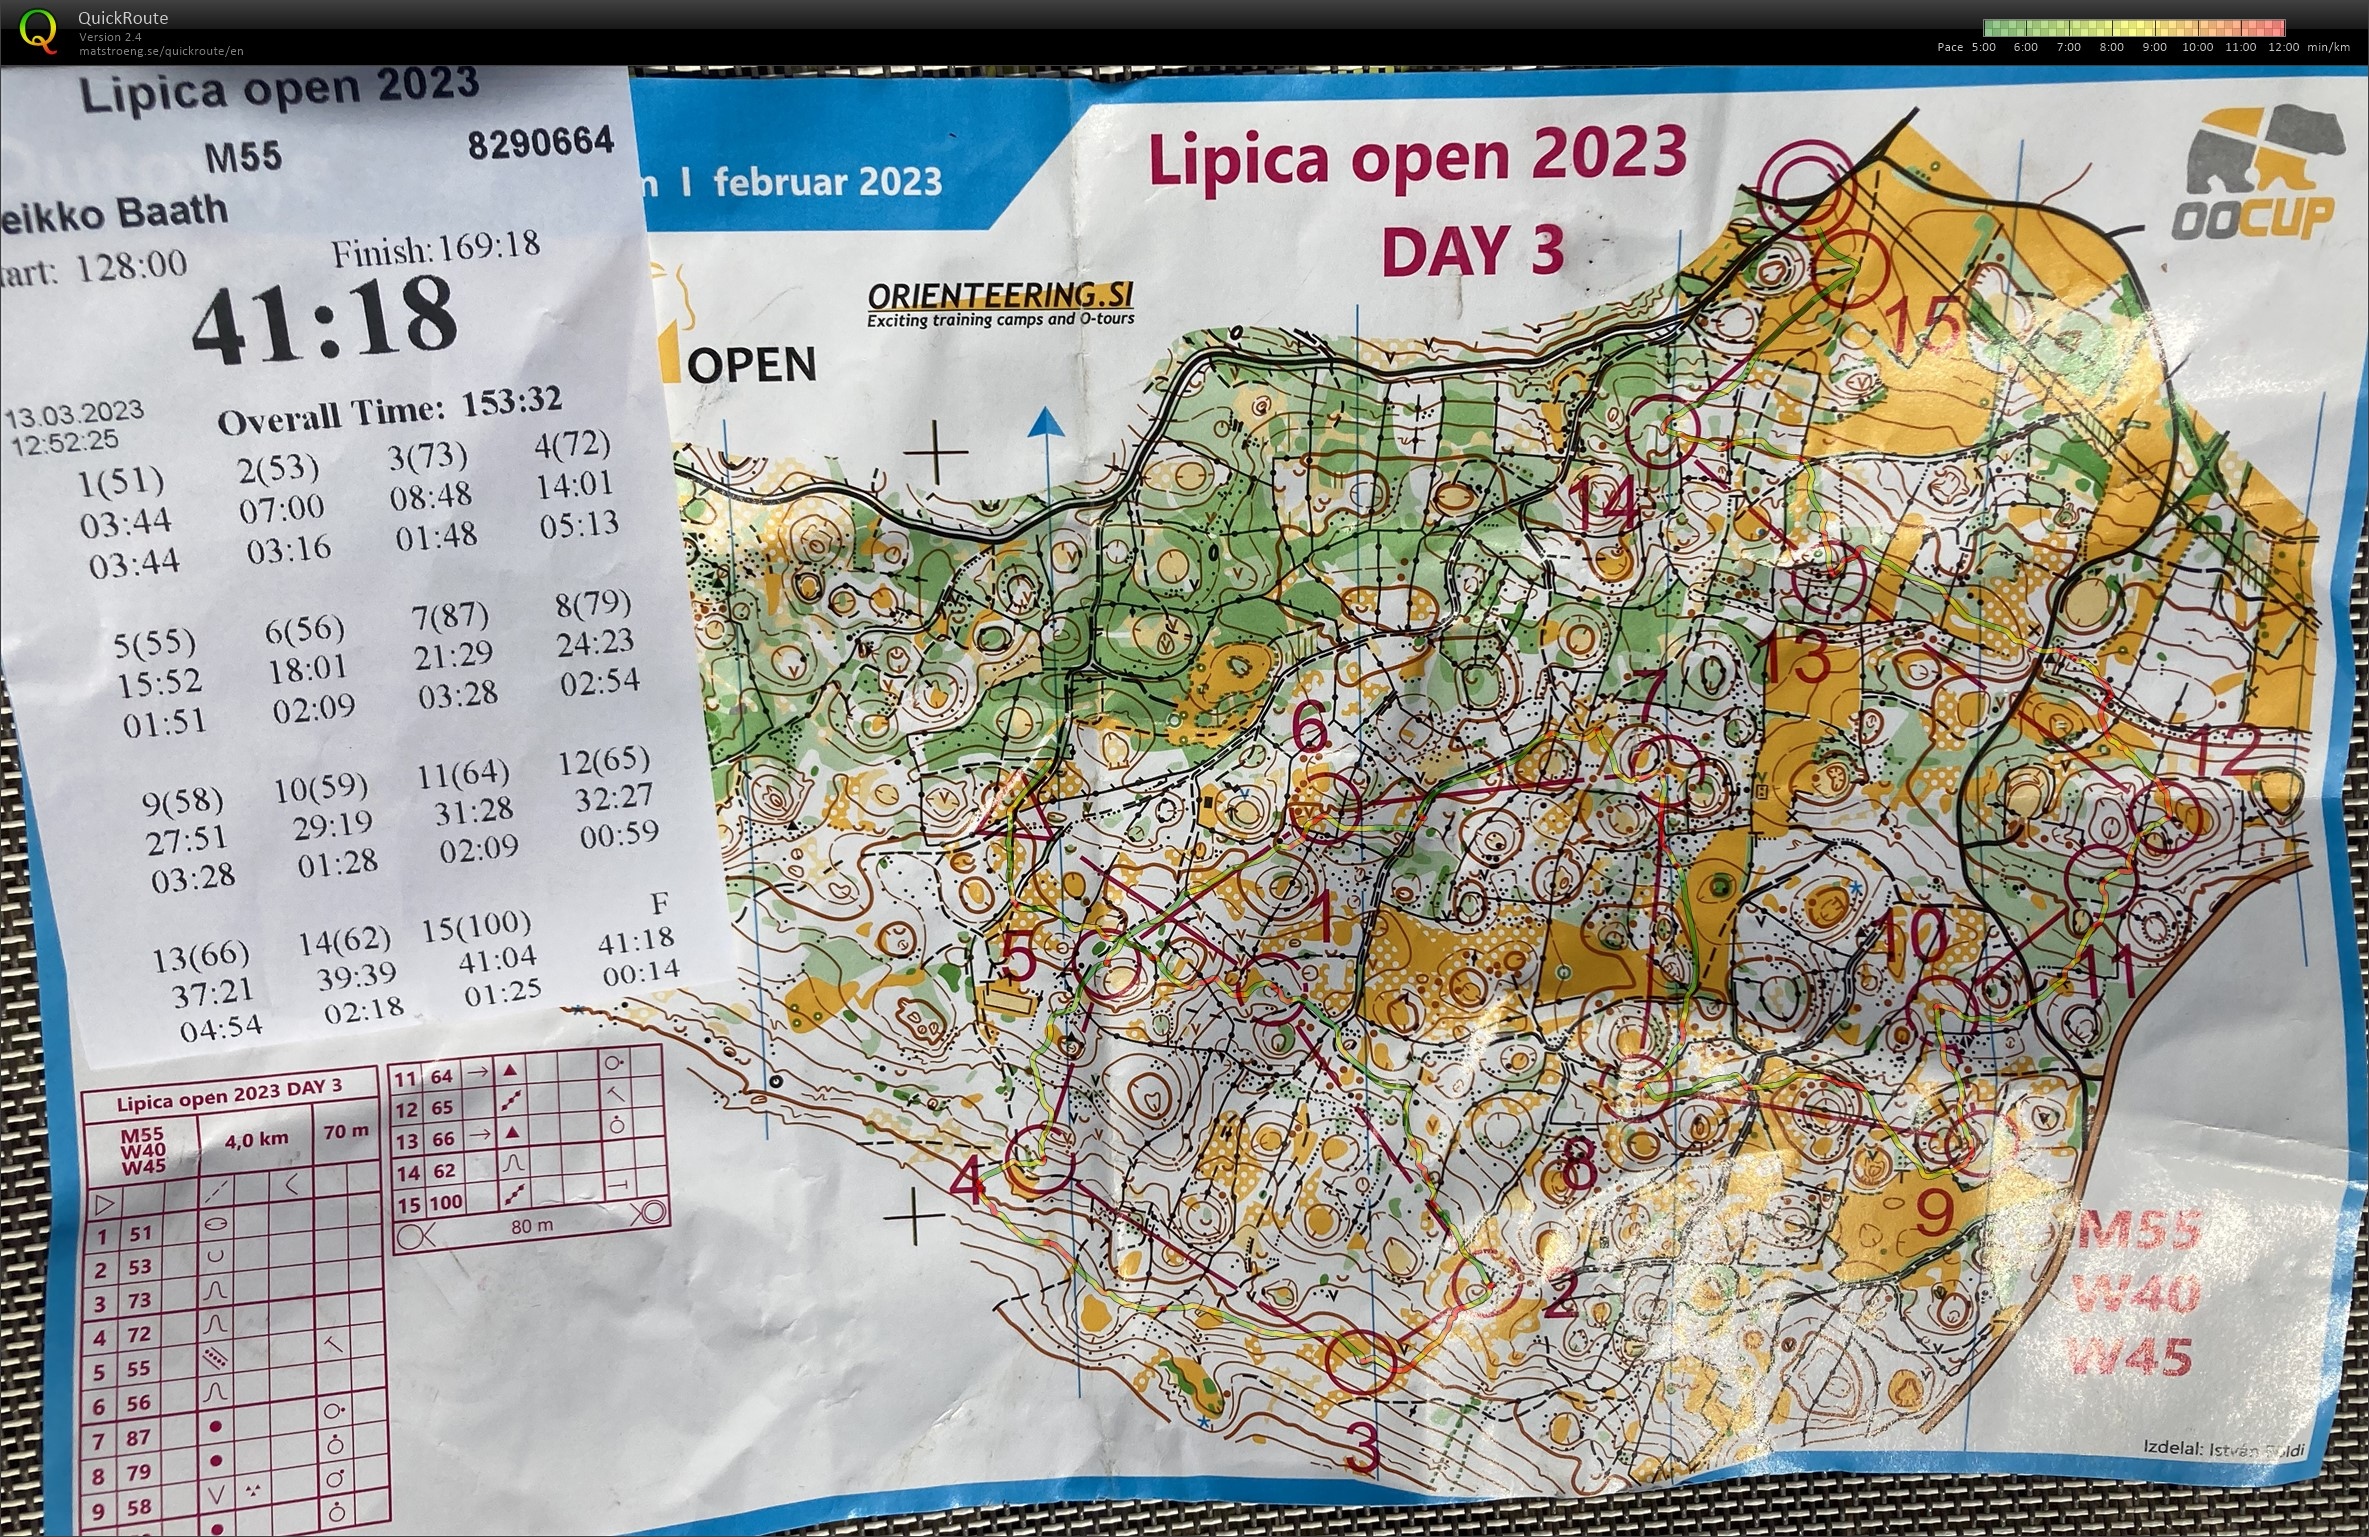 Lipica Open 2023 E3 (13.03.2023)